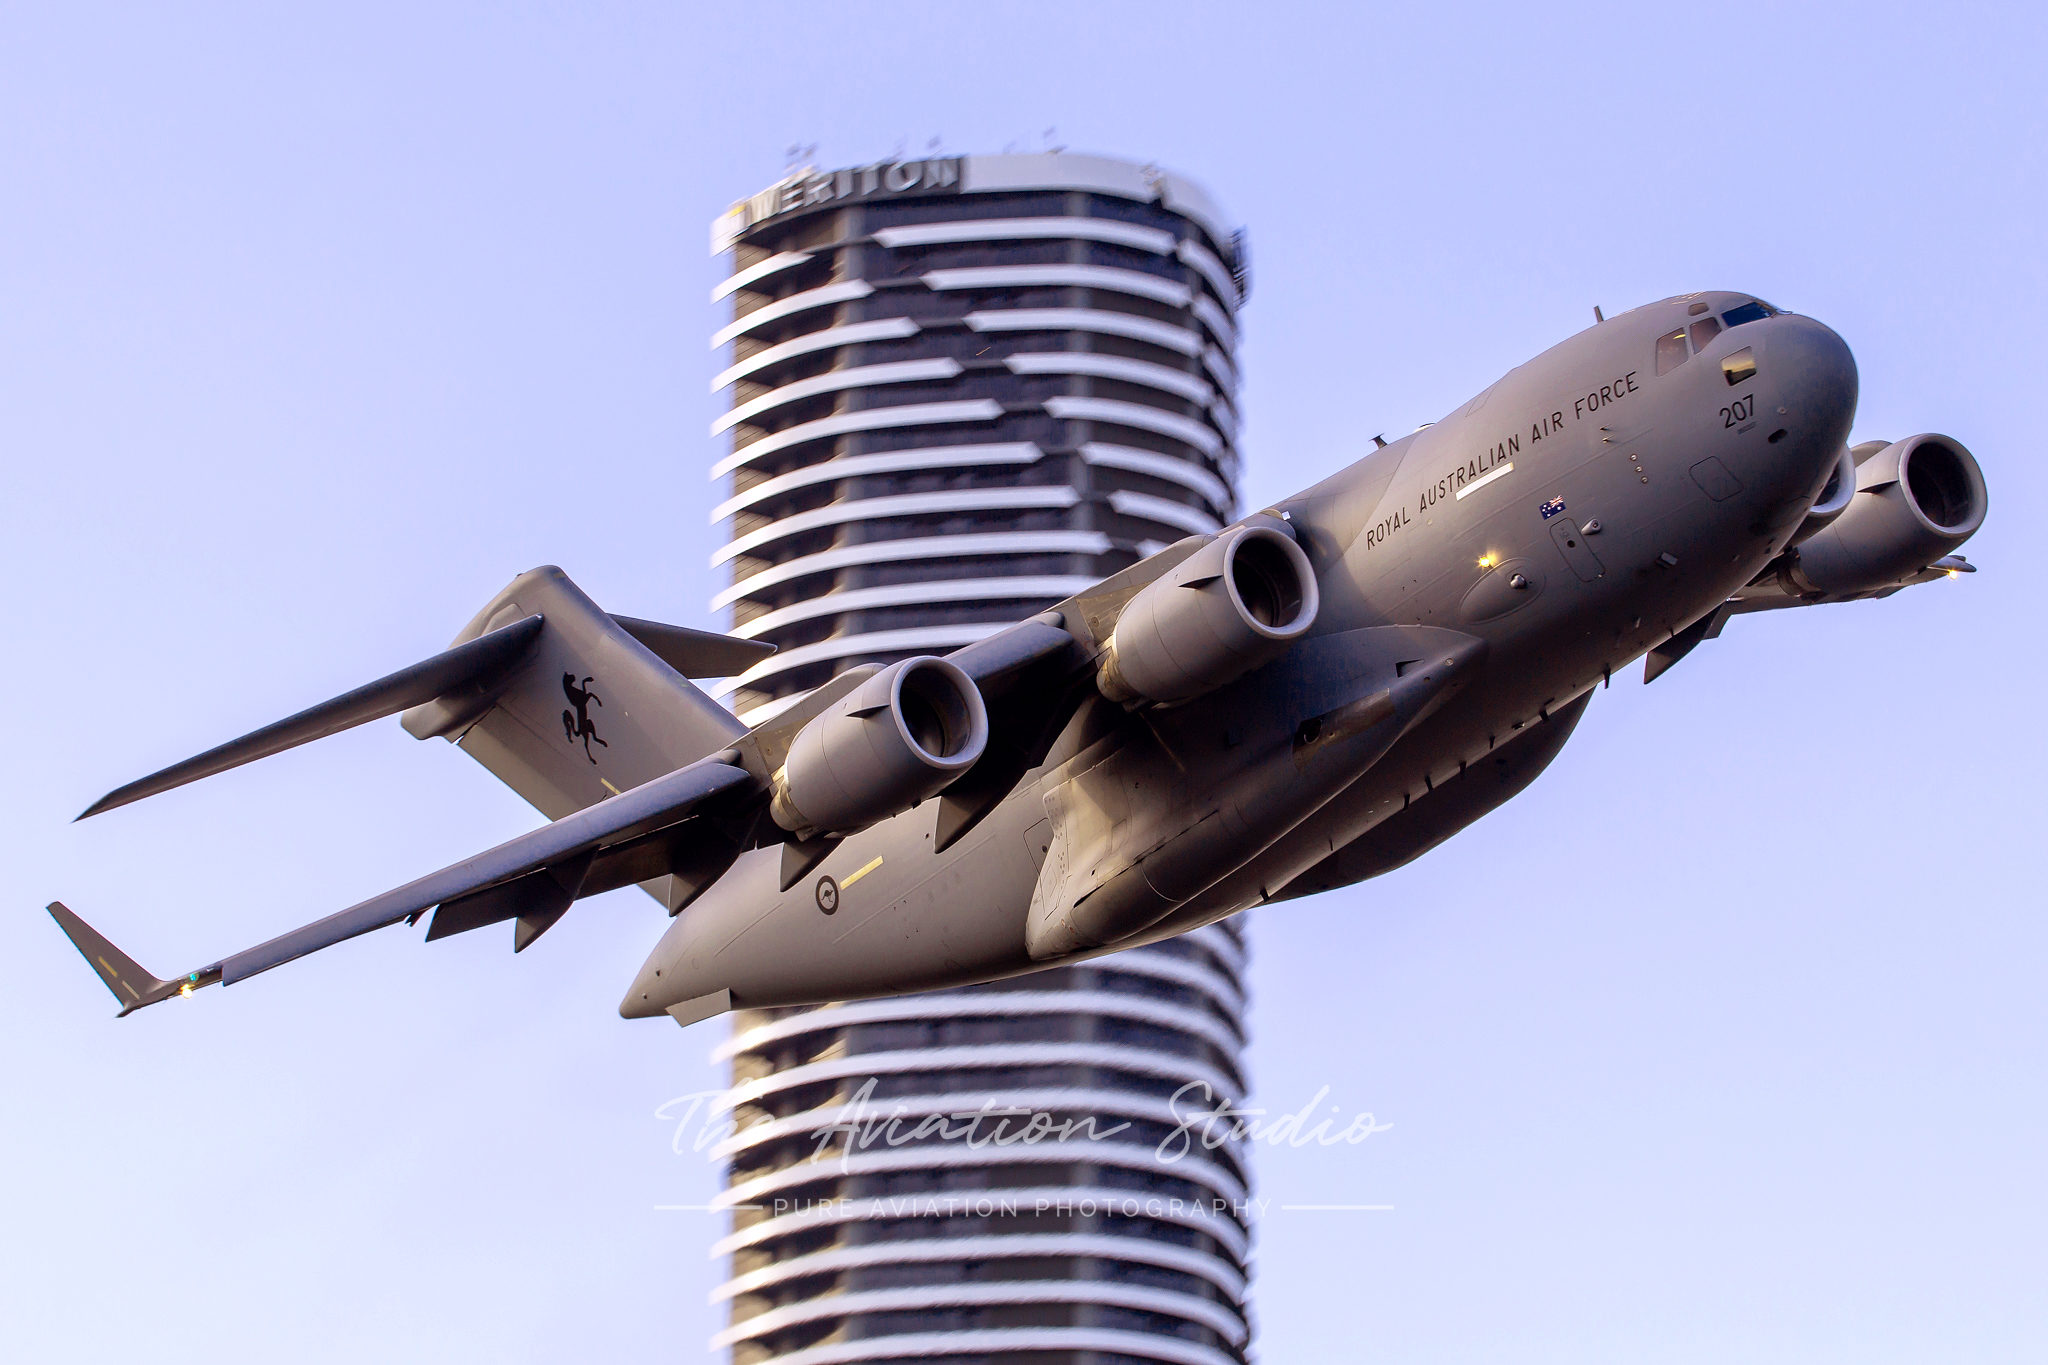 Royal Australian Air Force C-17 at Riverfire Brisbane 2019